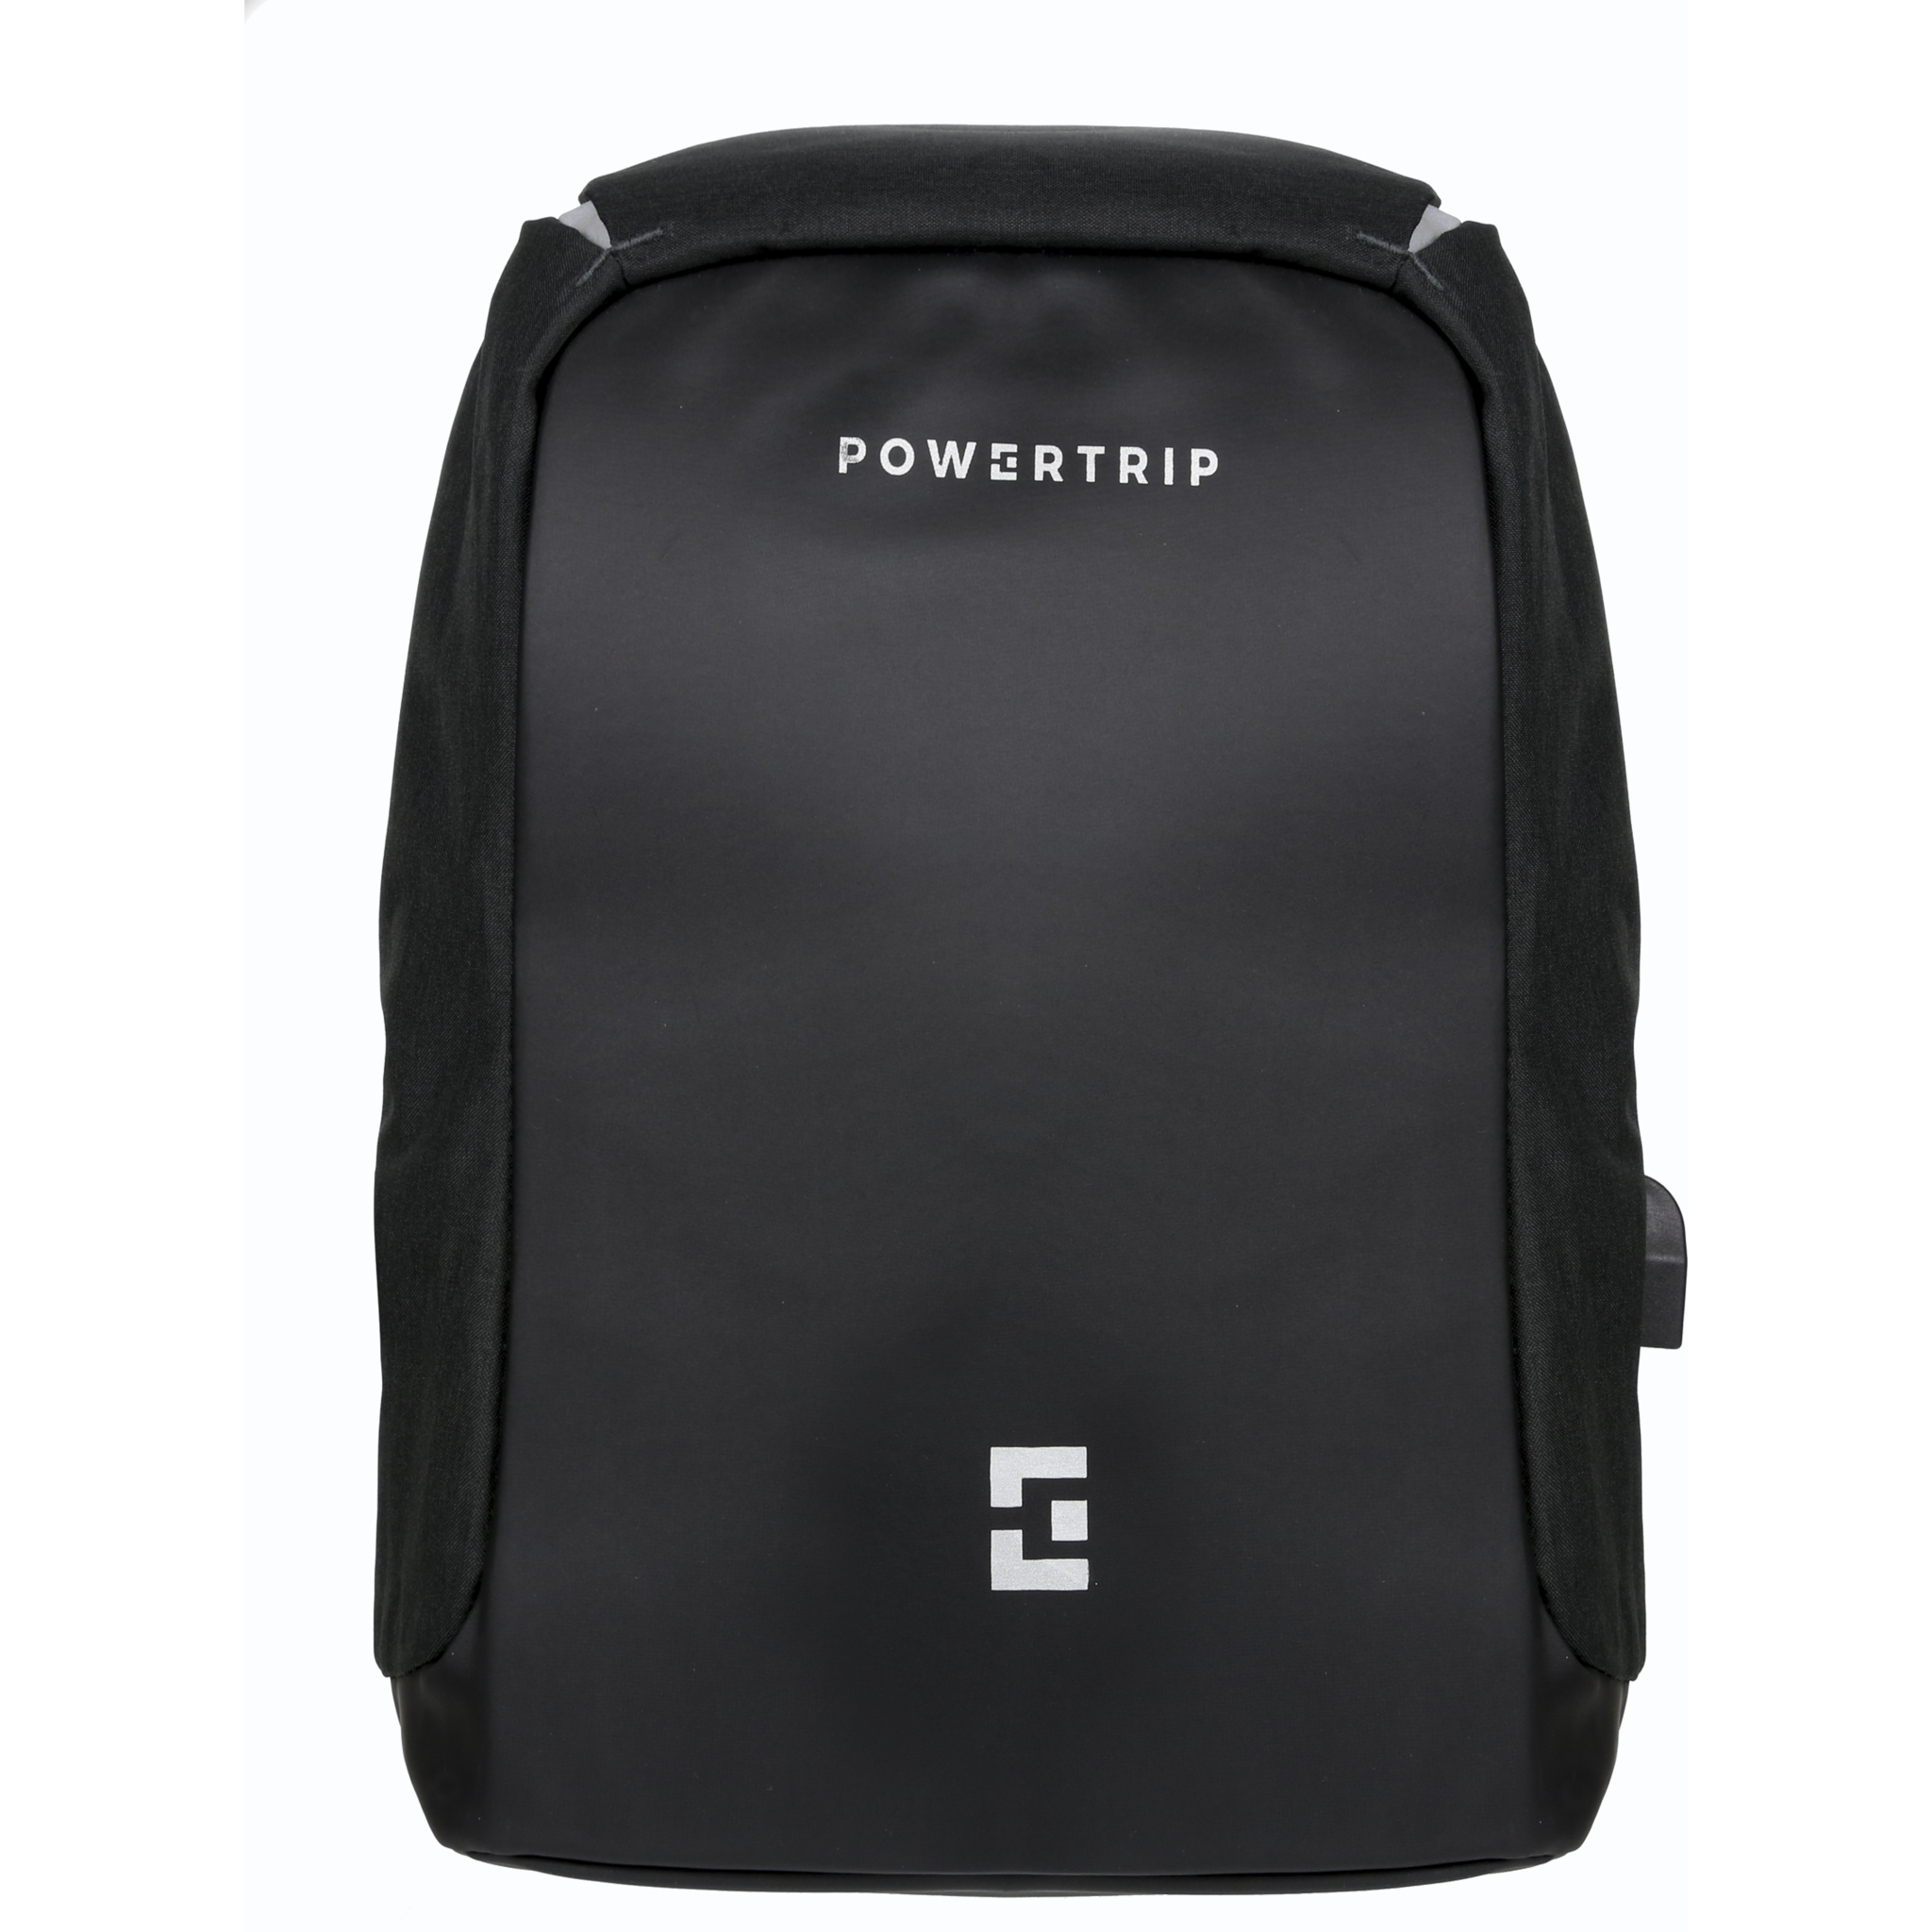 Powertrip Smart Backpack